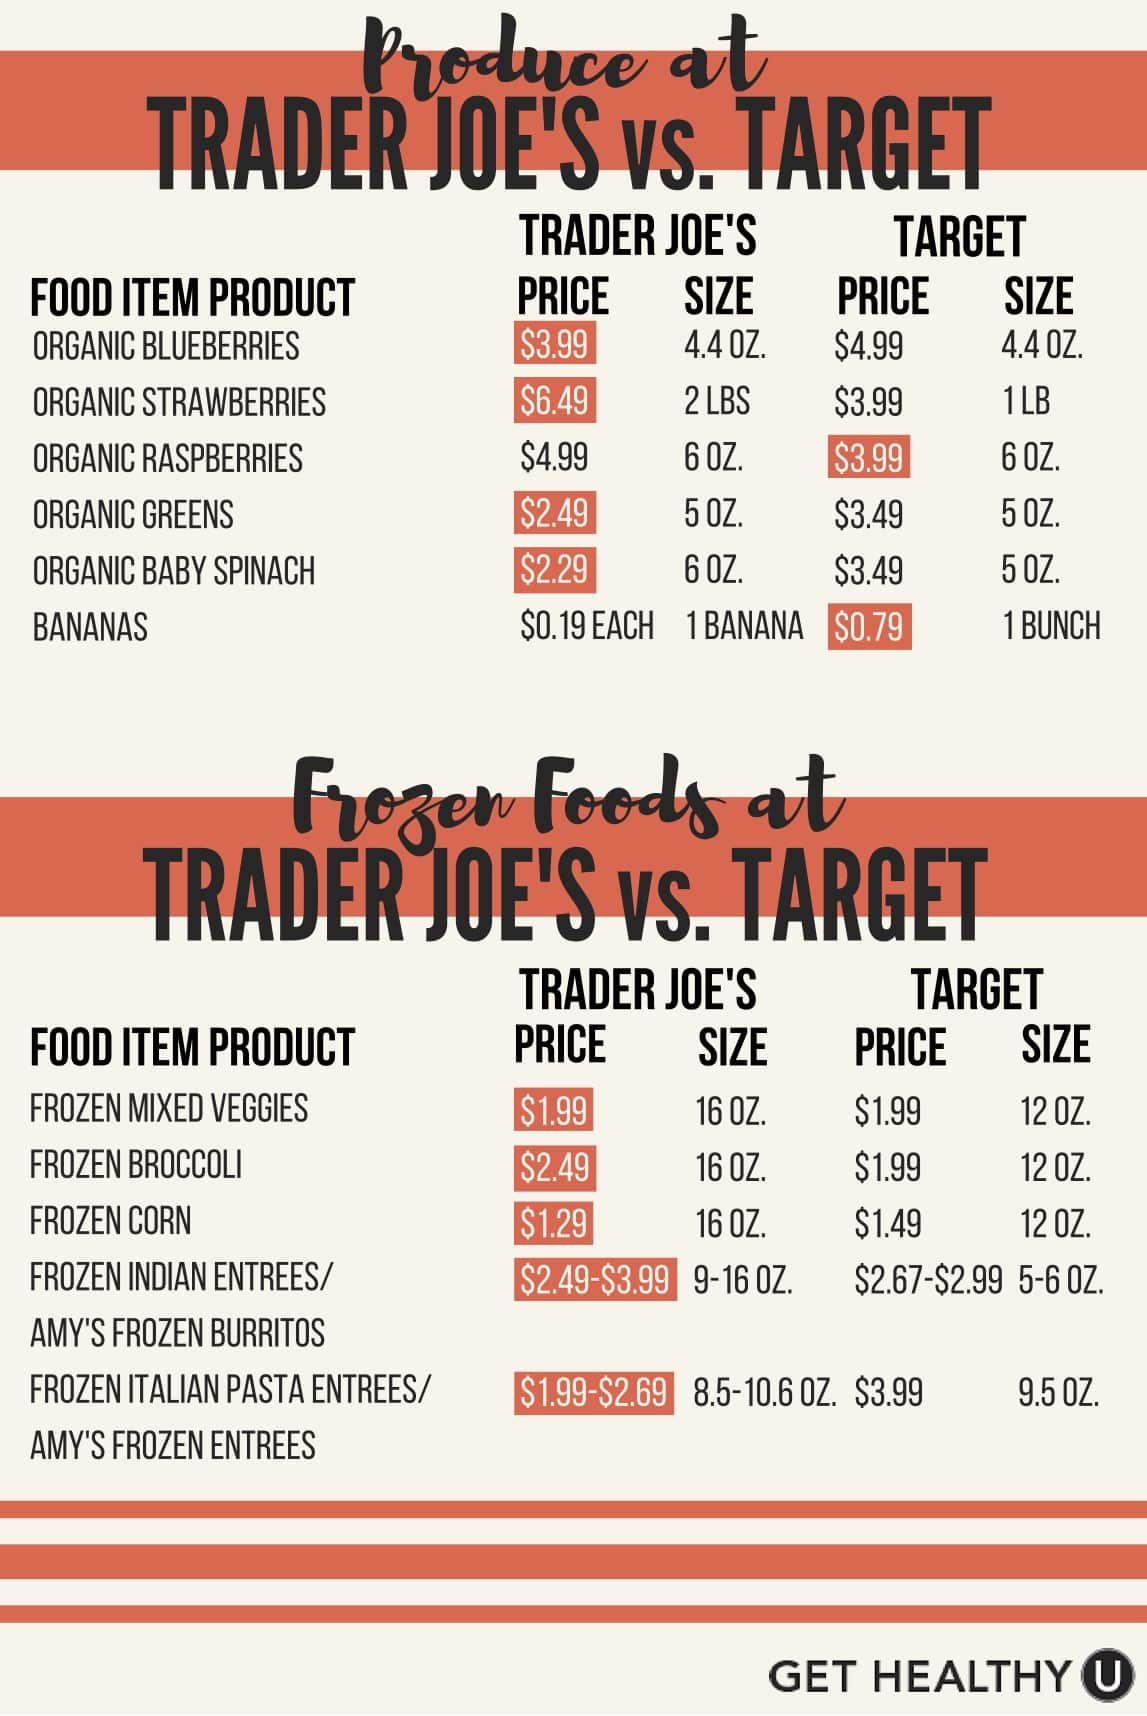 is trader joe's cheaper than target